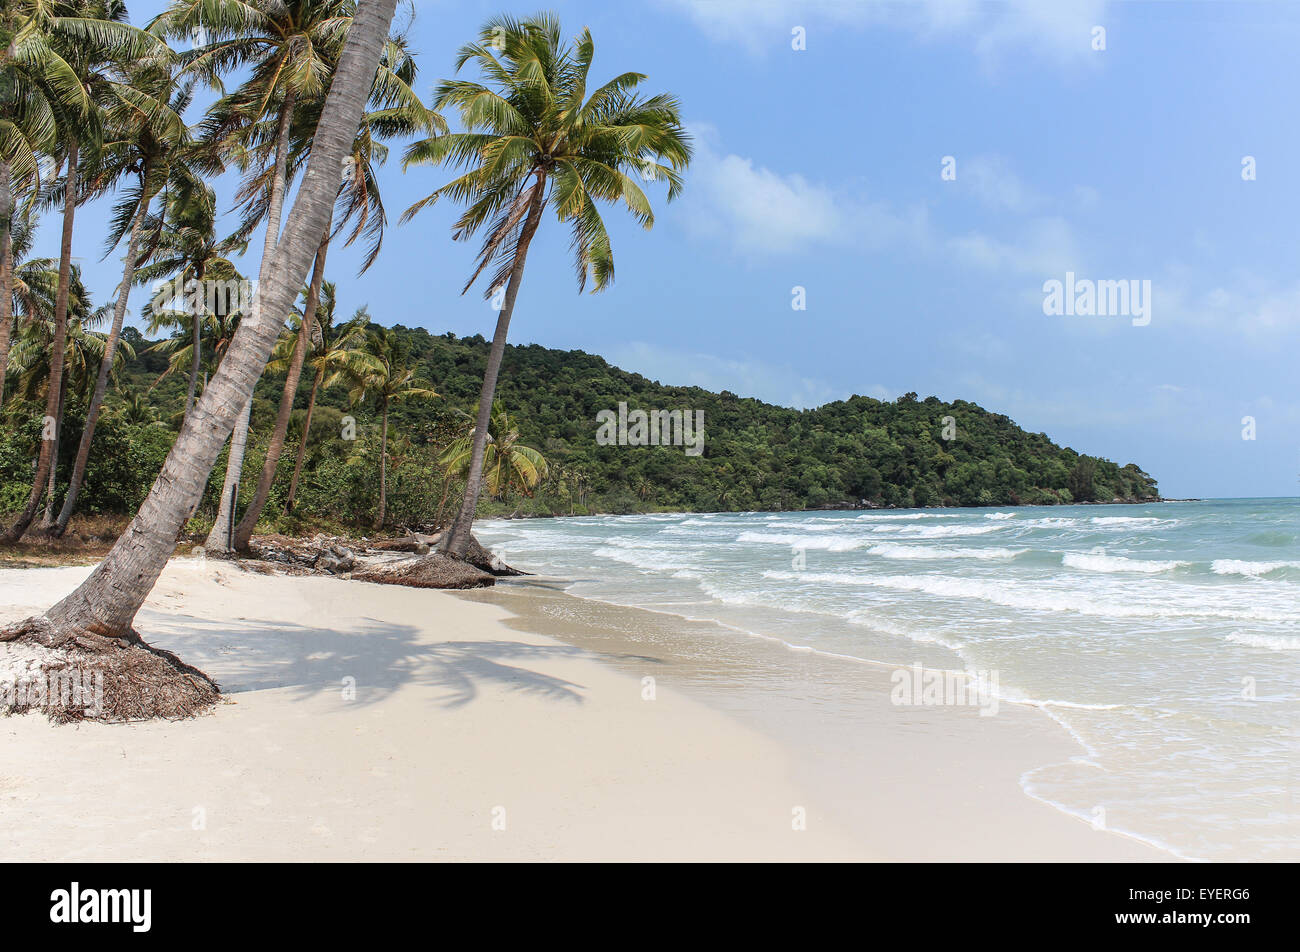 Spiaggia di sabbia bianca, palme e cielo blu Foto Stock